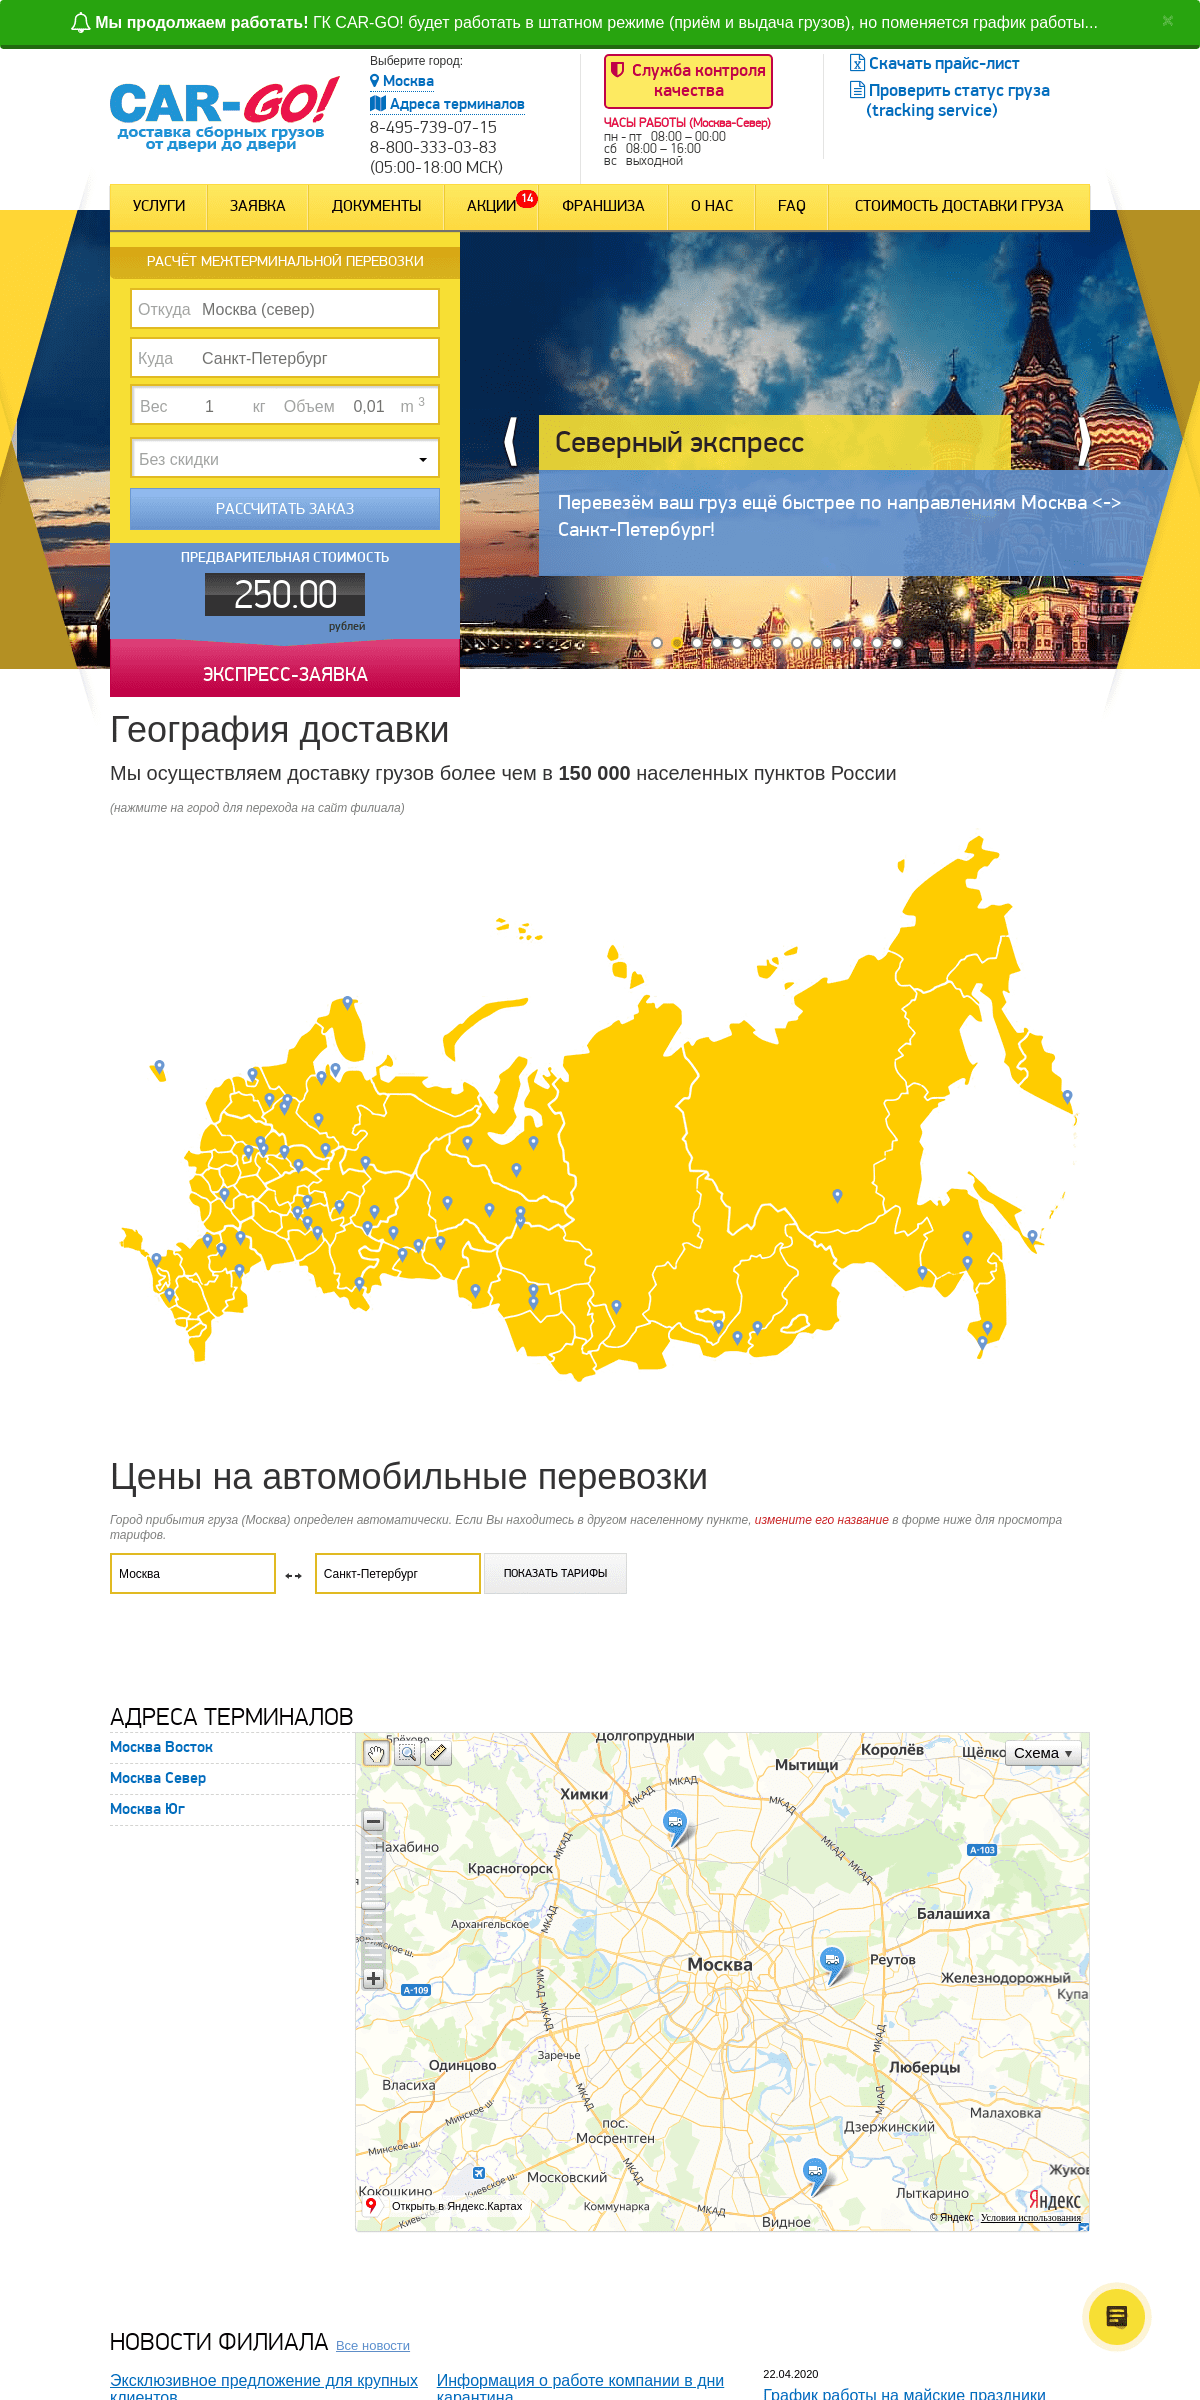 A complete backup of dostavkagruzov.com